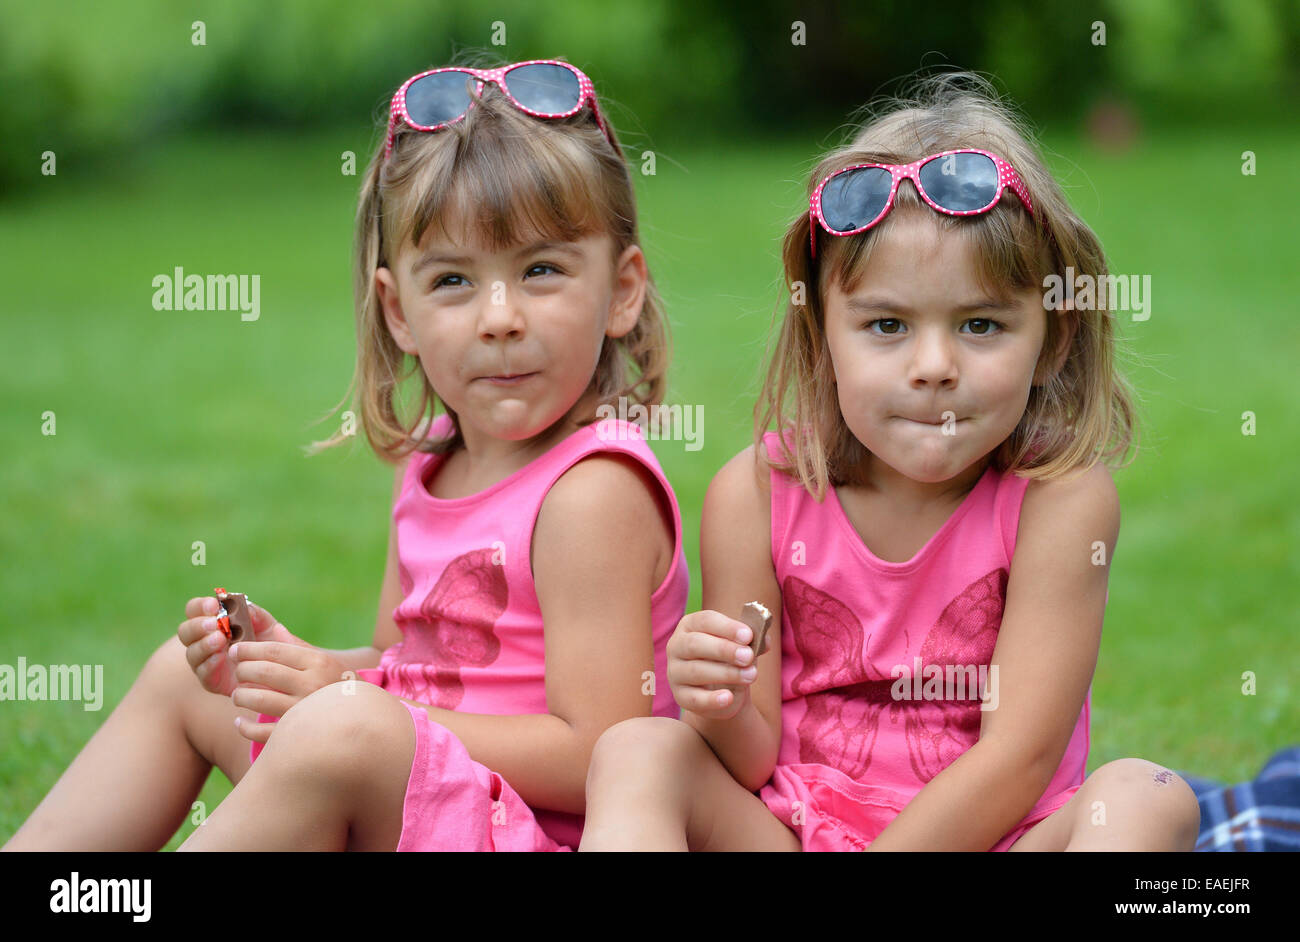 Zwillinge Mädchen Foto Frank Mai Stockfotografie Alamy 